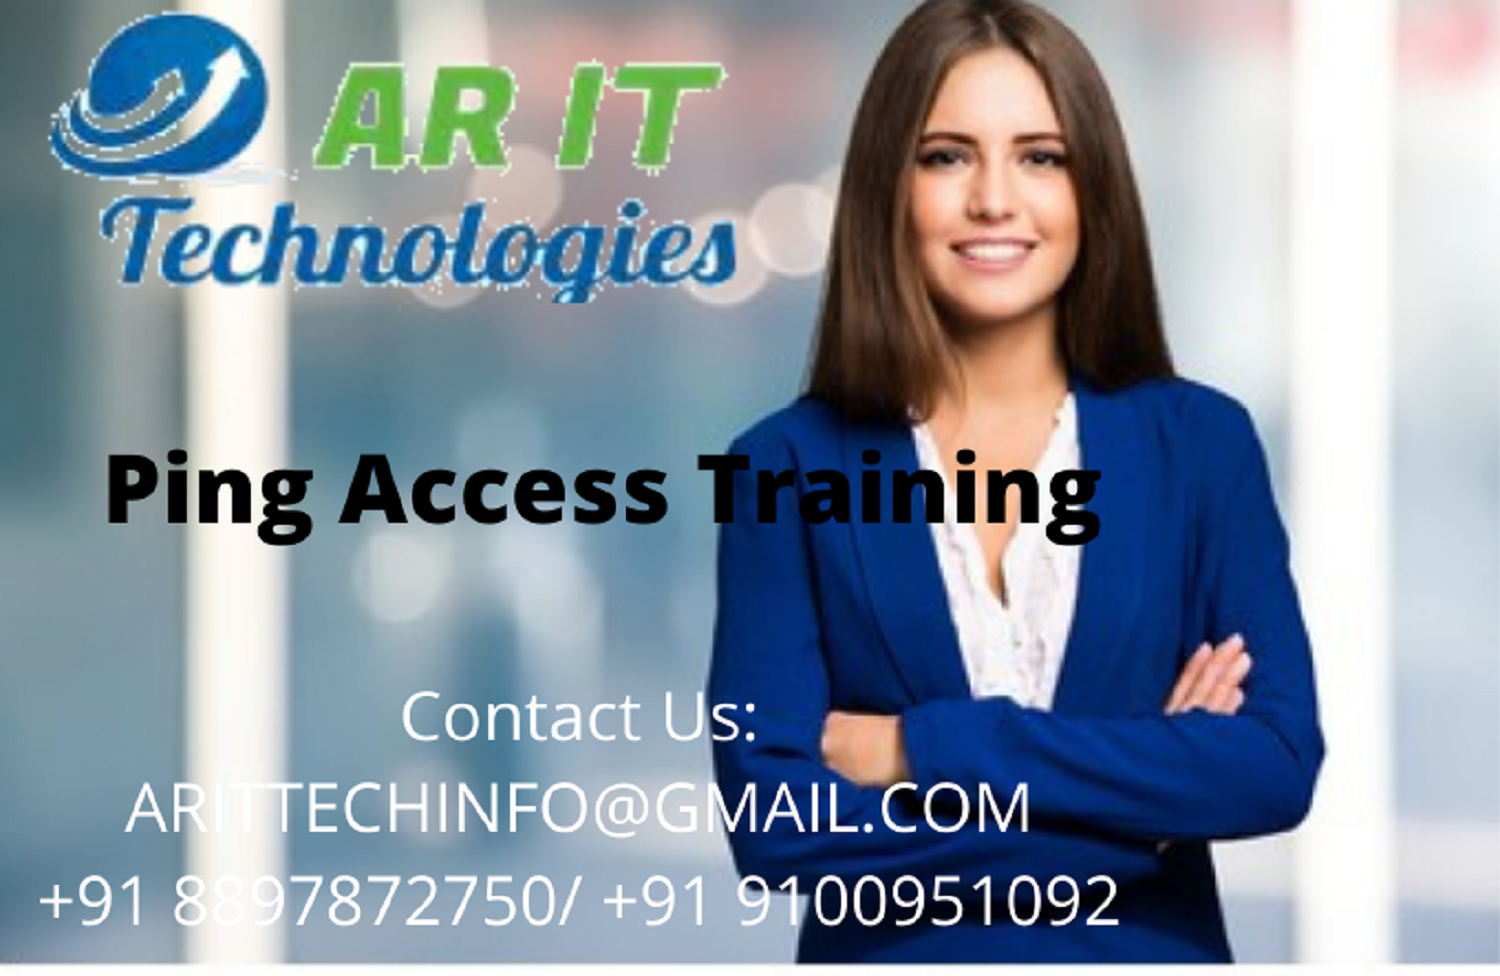 Ping Access Training | Ping Access Corporate Training - ARIT, Hyderabad, Andhra Pradesh, India